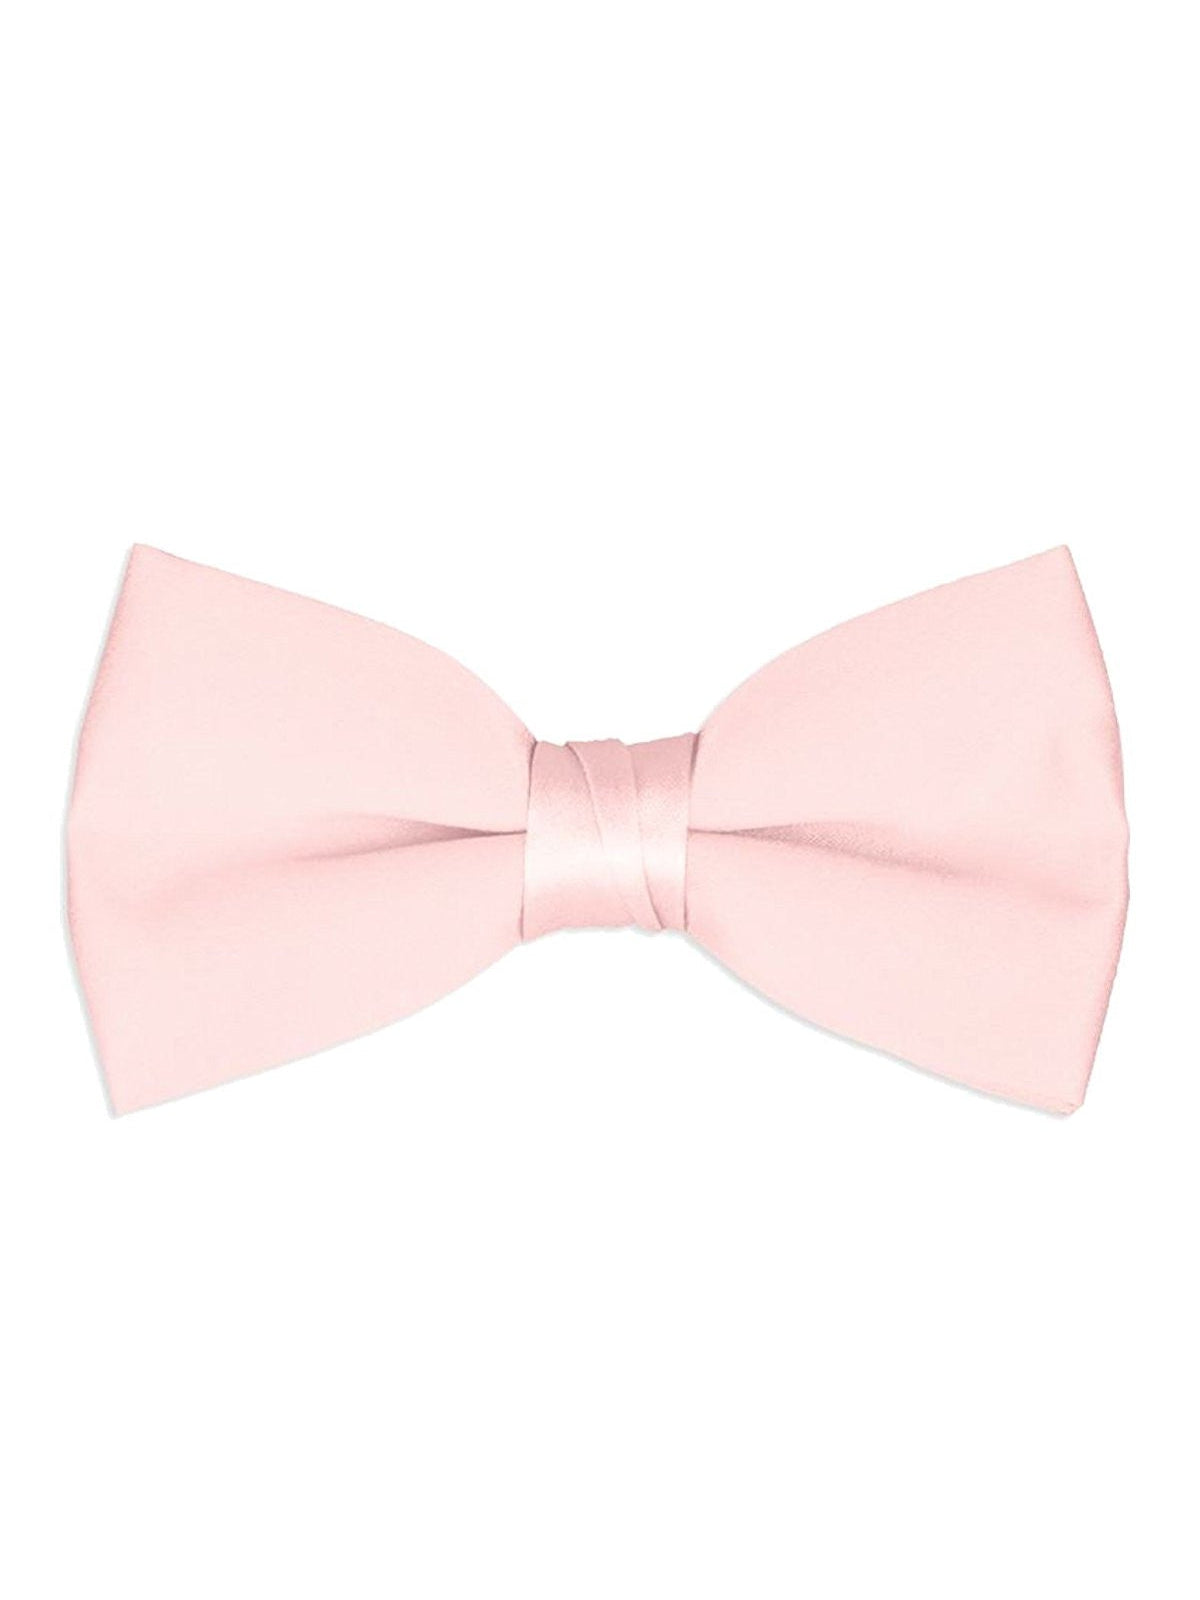 Men's Classic Pre-Tied Formal Tuxedo Bow Tie - Pink